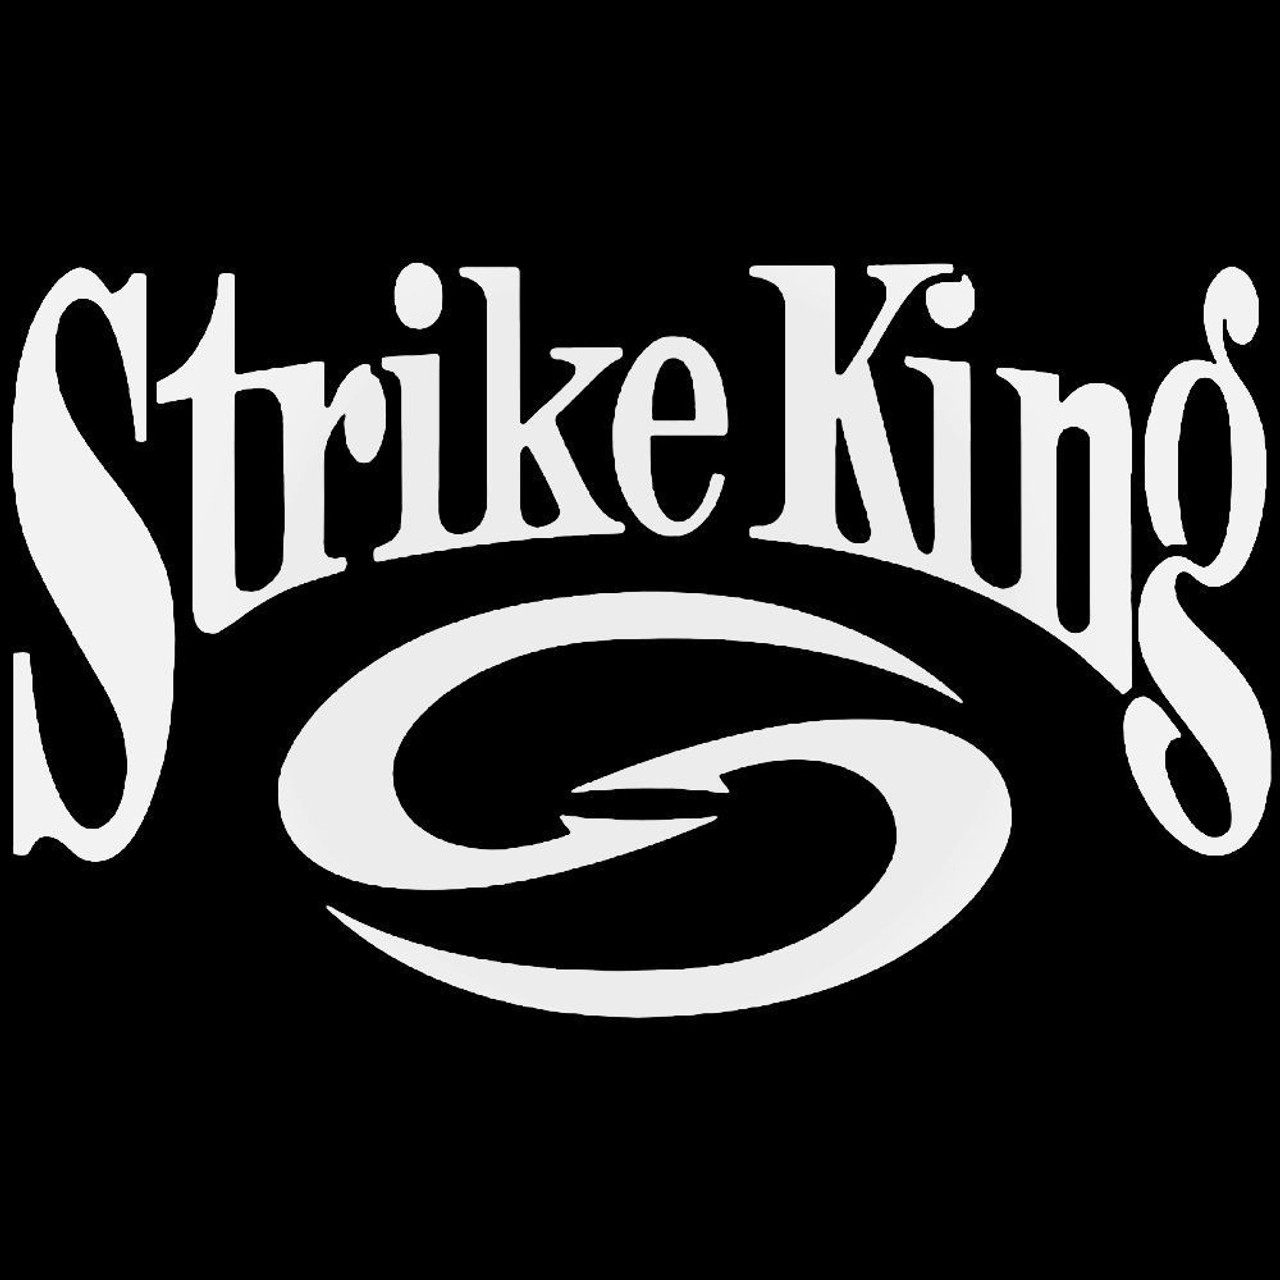 Strike King 2 Vinyl Decal Sticker